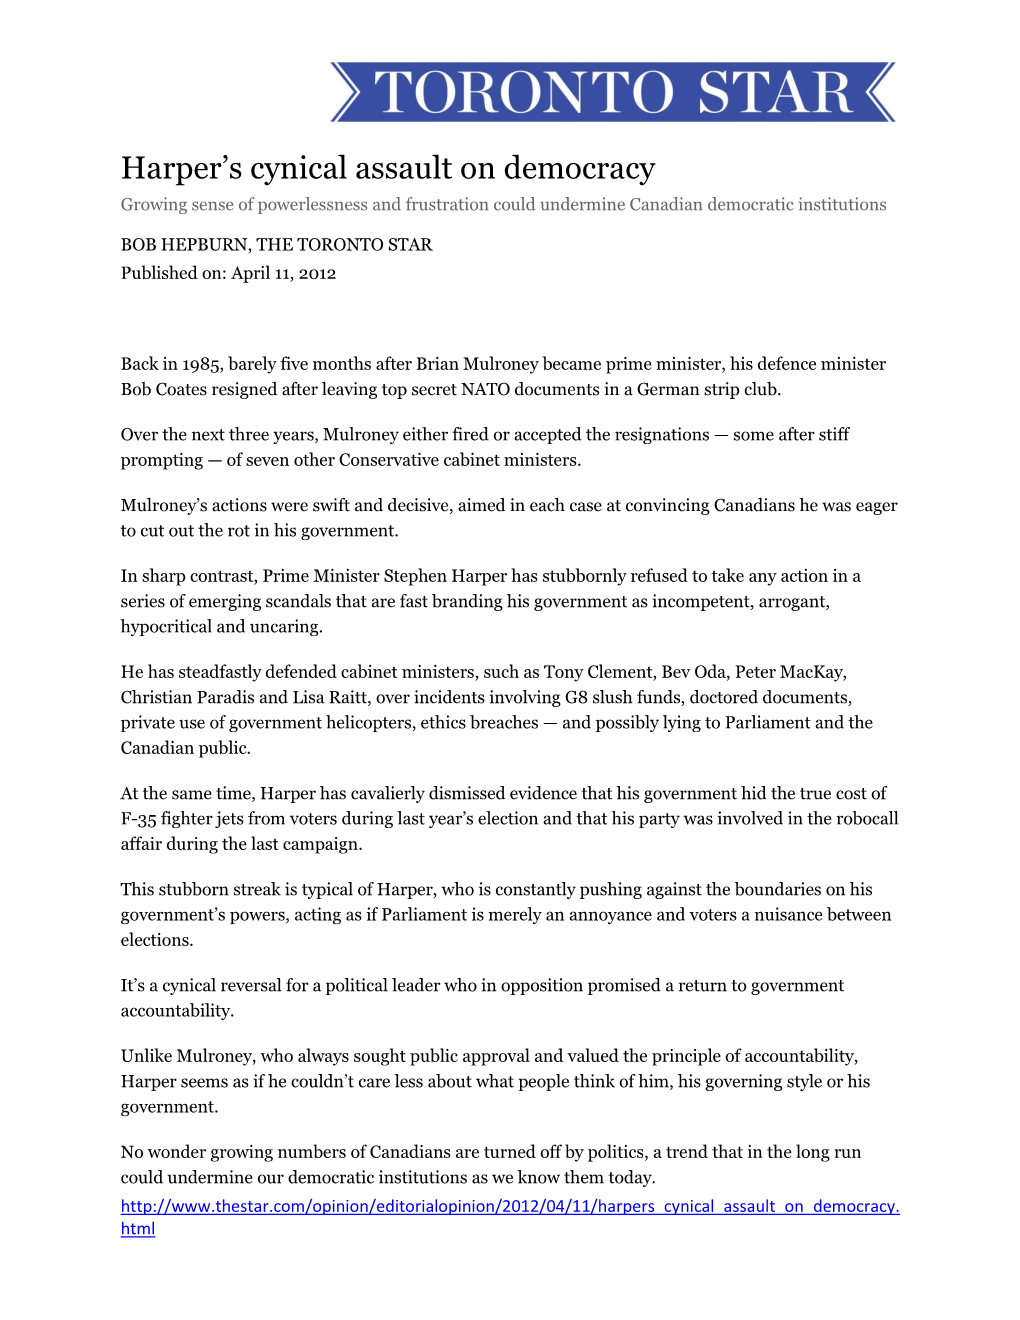 Harper's Cynical Assault on Democracy